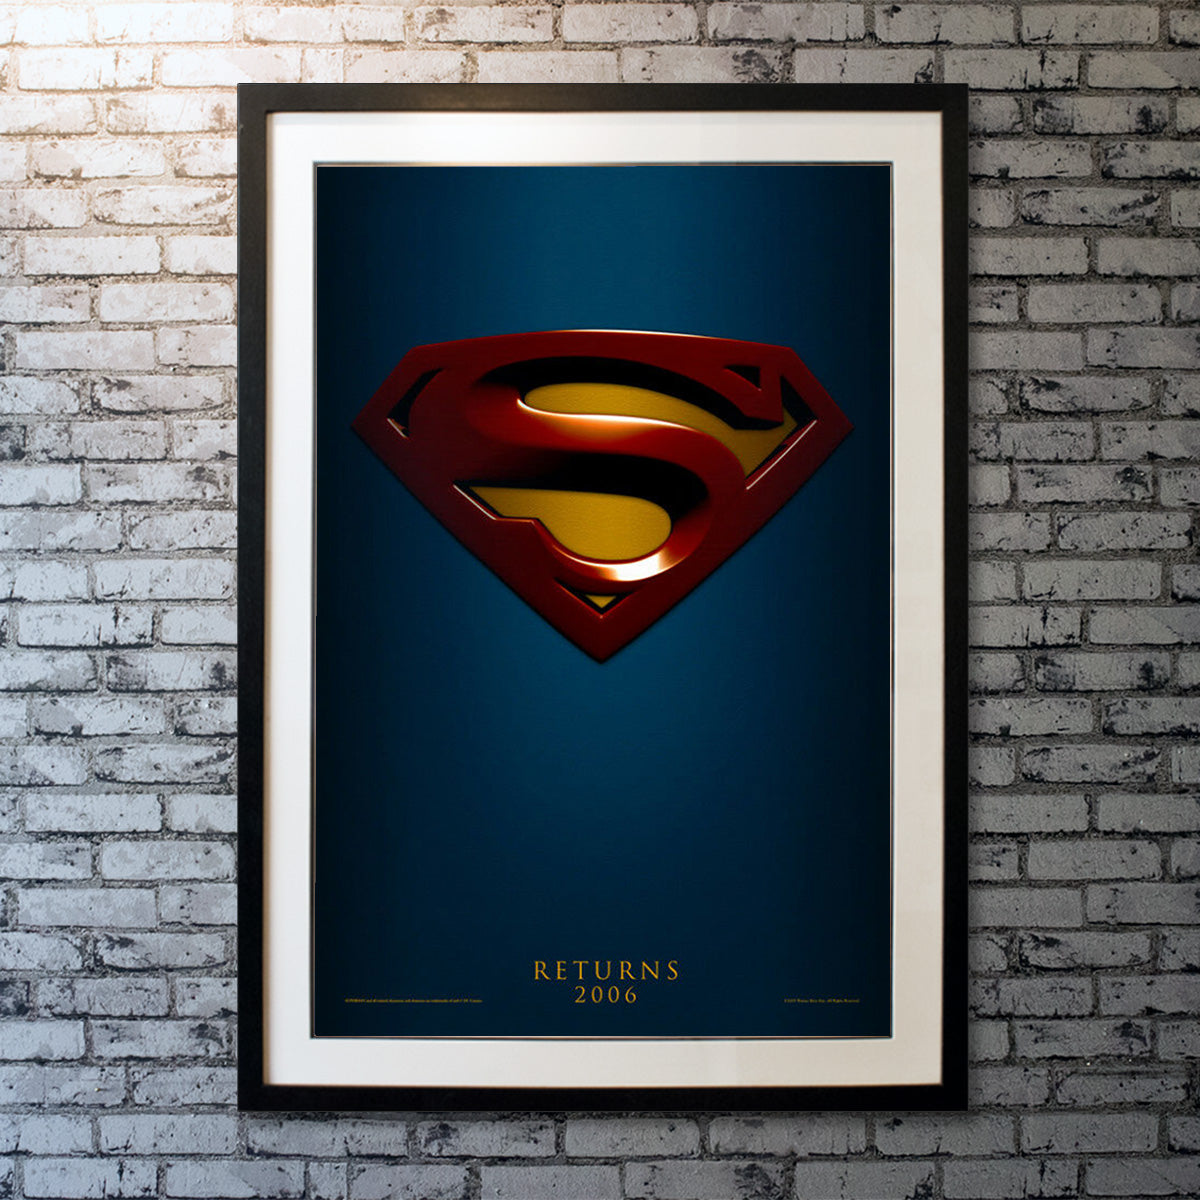 Original Movie Poster of Superman Returns (2006)